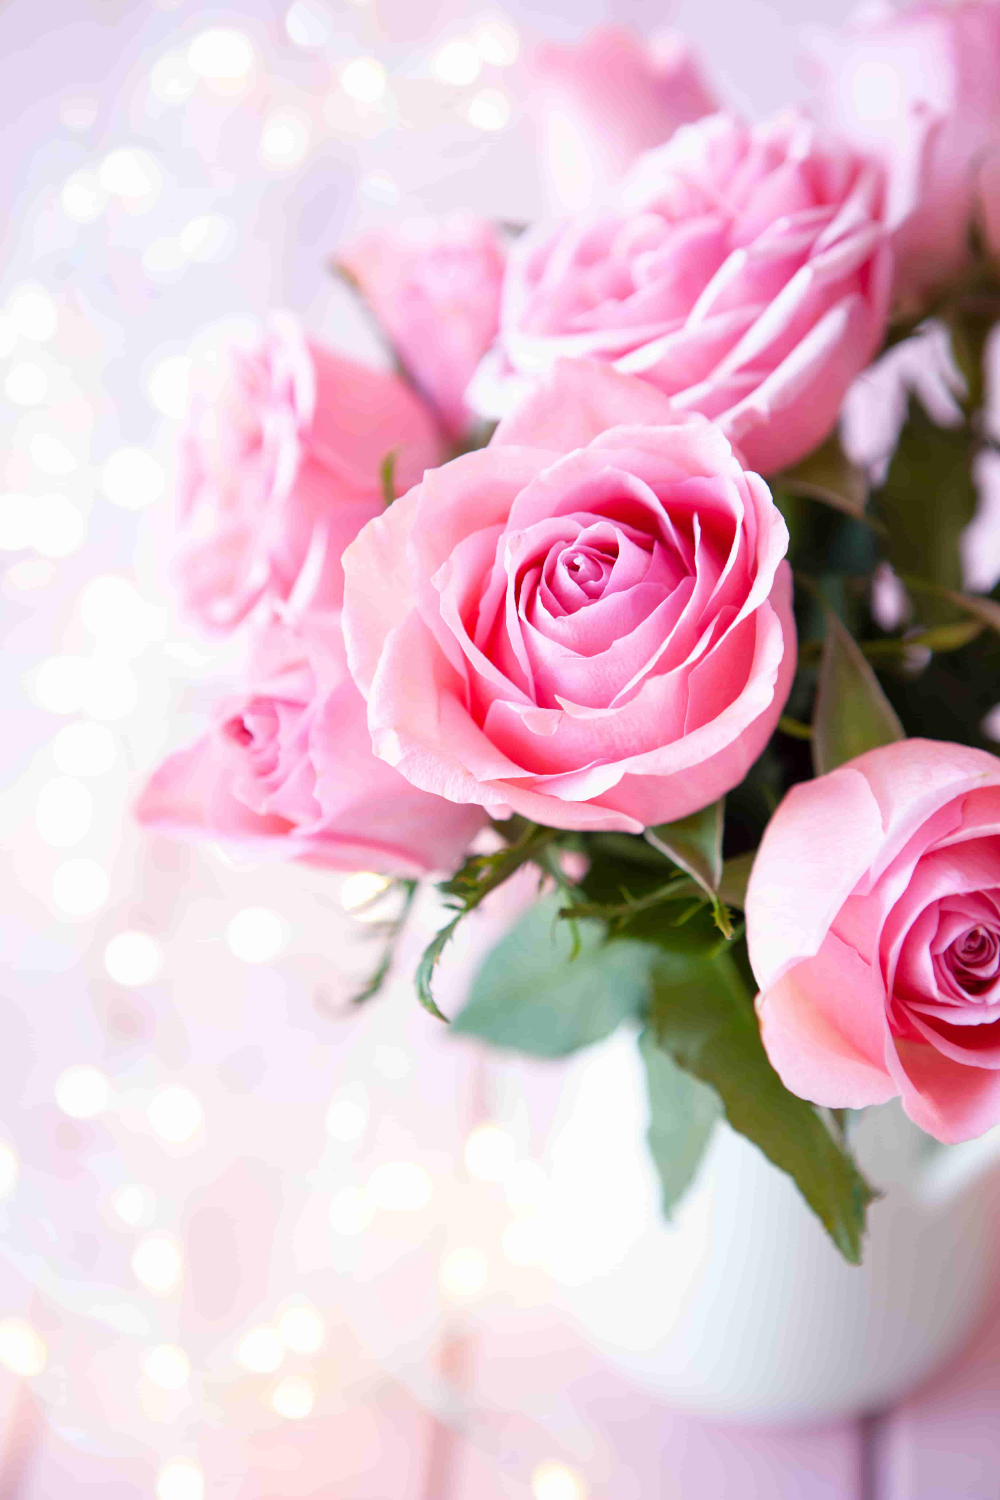 Pink rose wallpaper in HD for mobile #pinkrose #rose #wallpaper. Pink rose flower, Love rose flower, Rose image